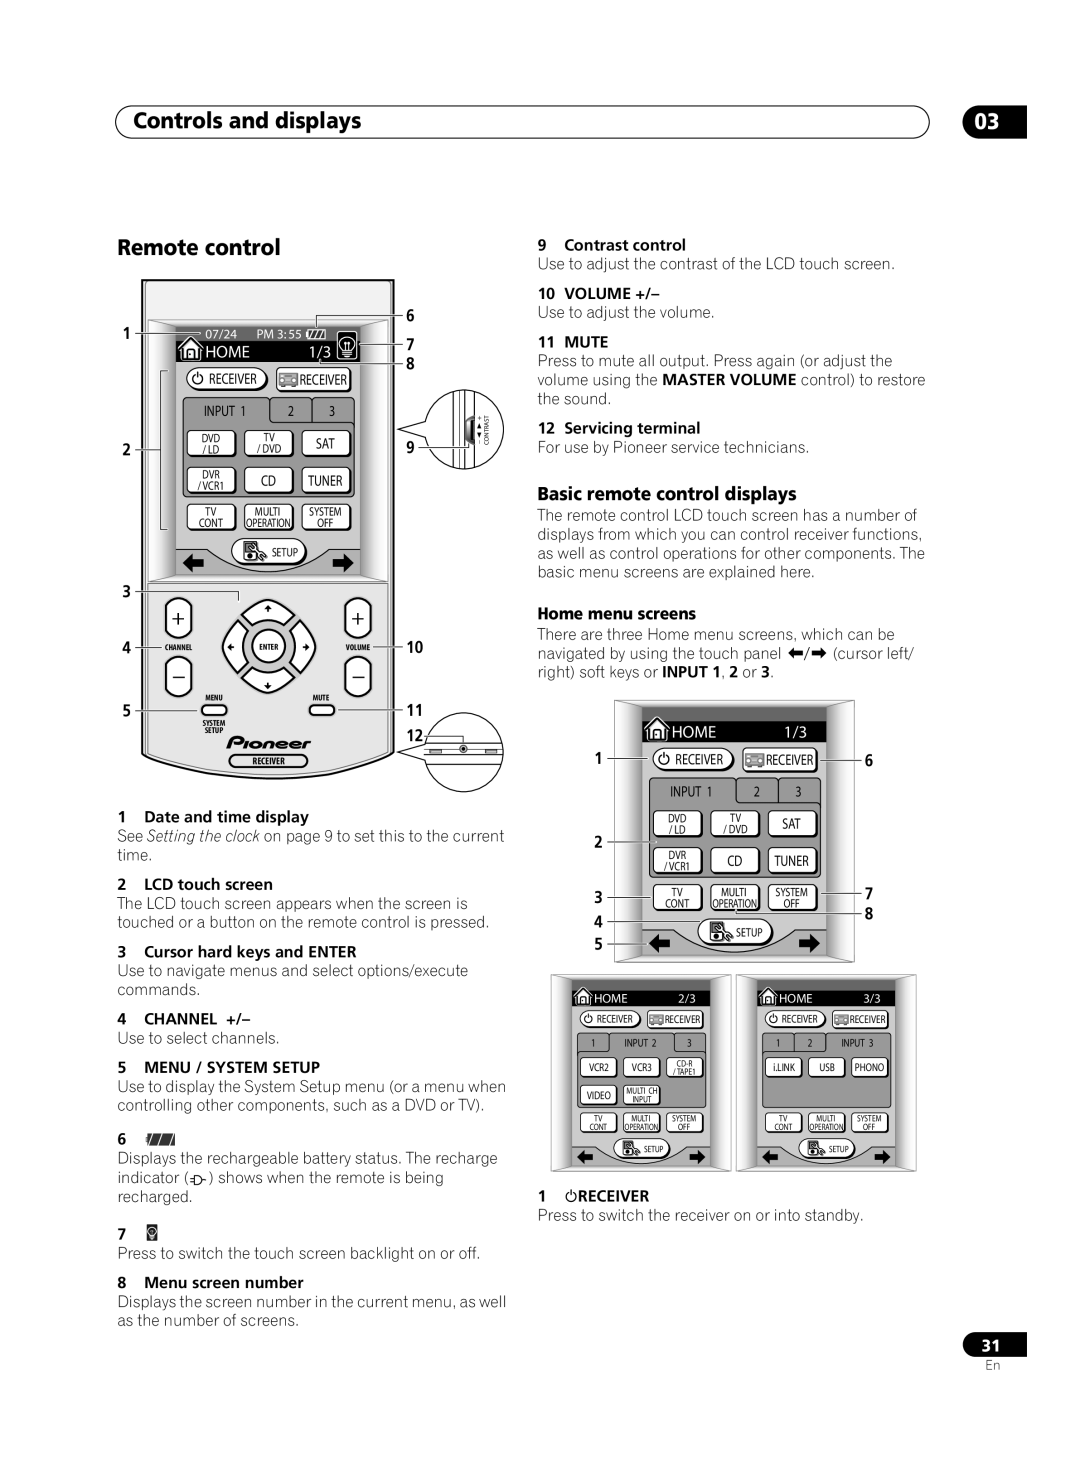 Pioneer VSX-AX10Ai-G Controls and displays Remote control, Basic remote control displays, 11 12, Home menu screens 